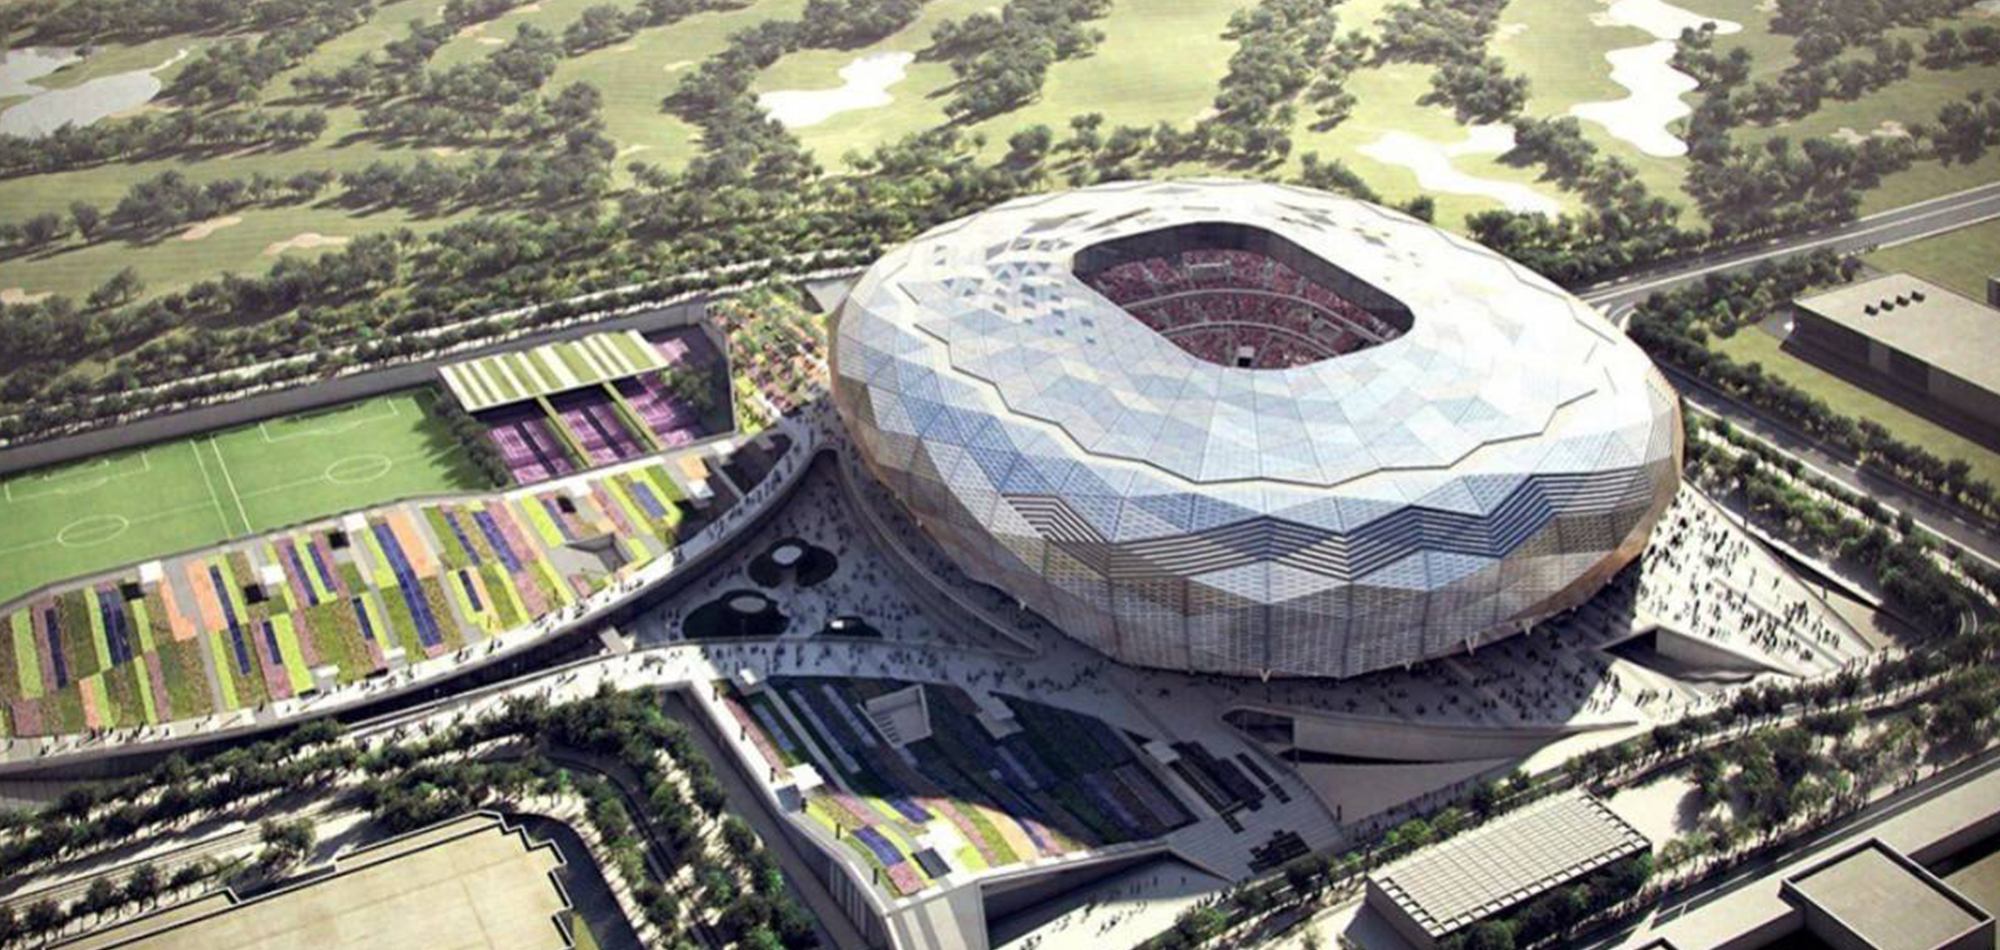 "I will be very proud when Education City Stadium hosts World Cup matches" says stadium engineer Muneera al-Jabir